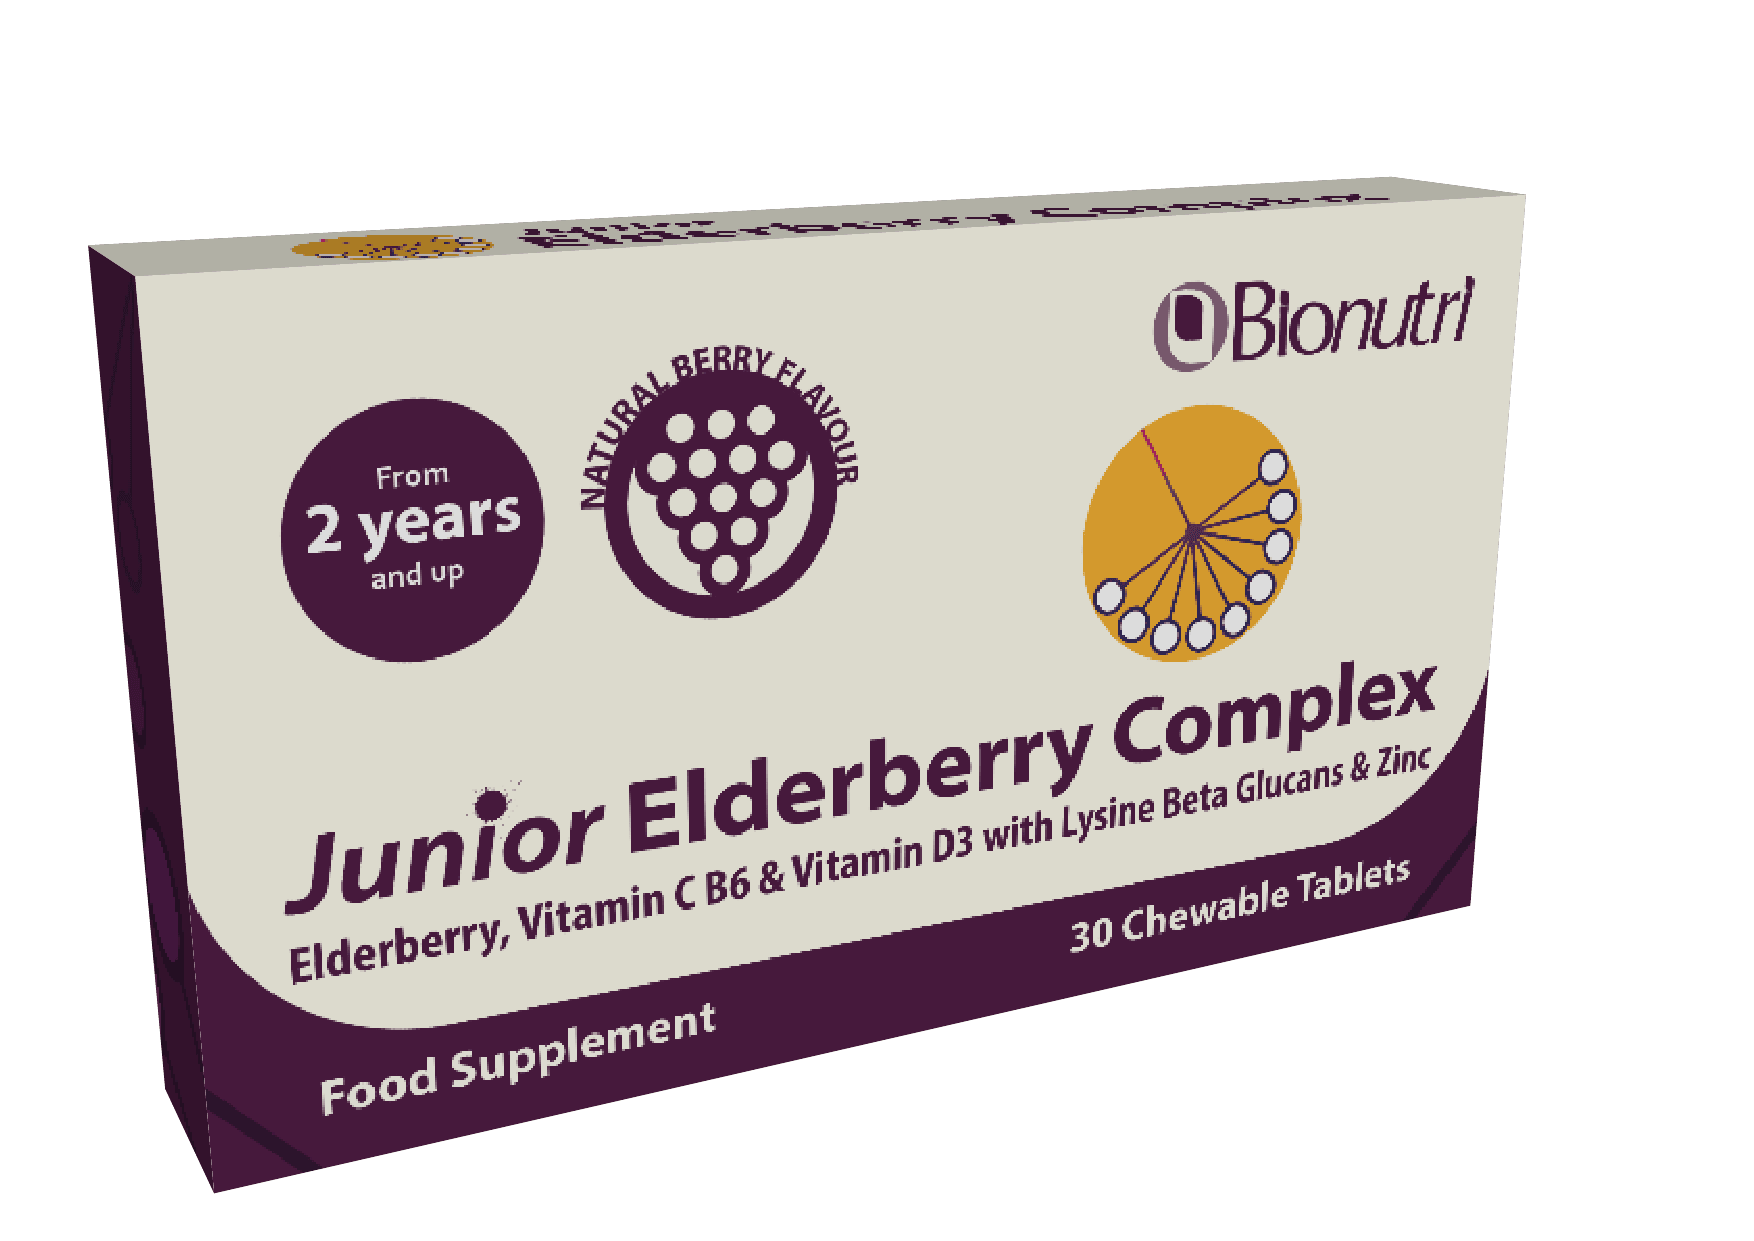 Bionutri Junior Elderberry Complex (Chewable) 30's - Approved Vitamins